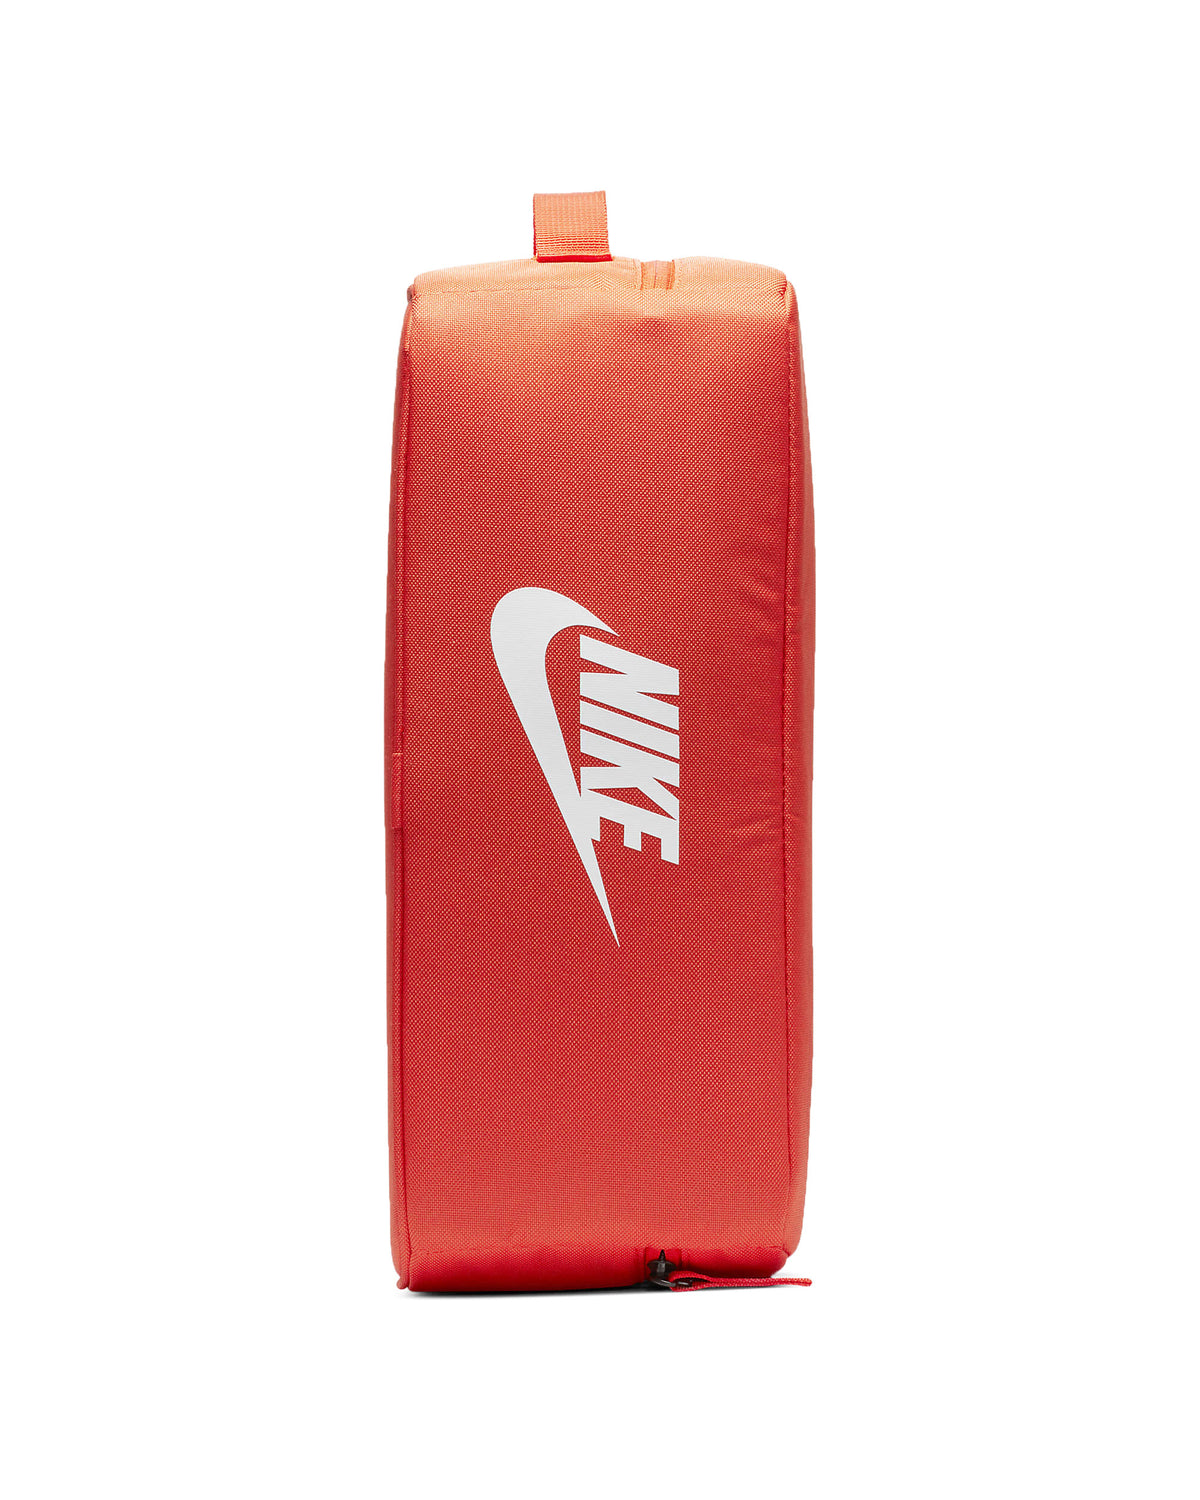 Portascarpe Nike Shoebox Arancione